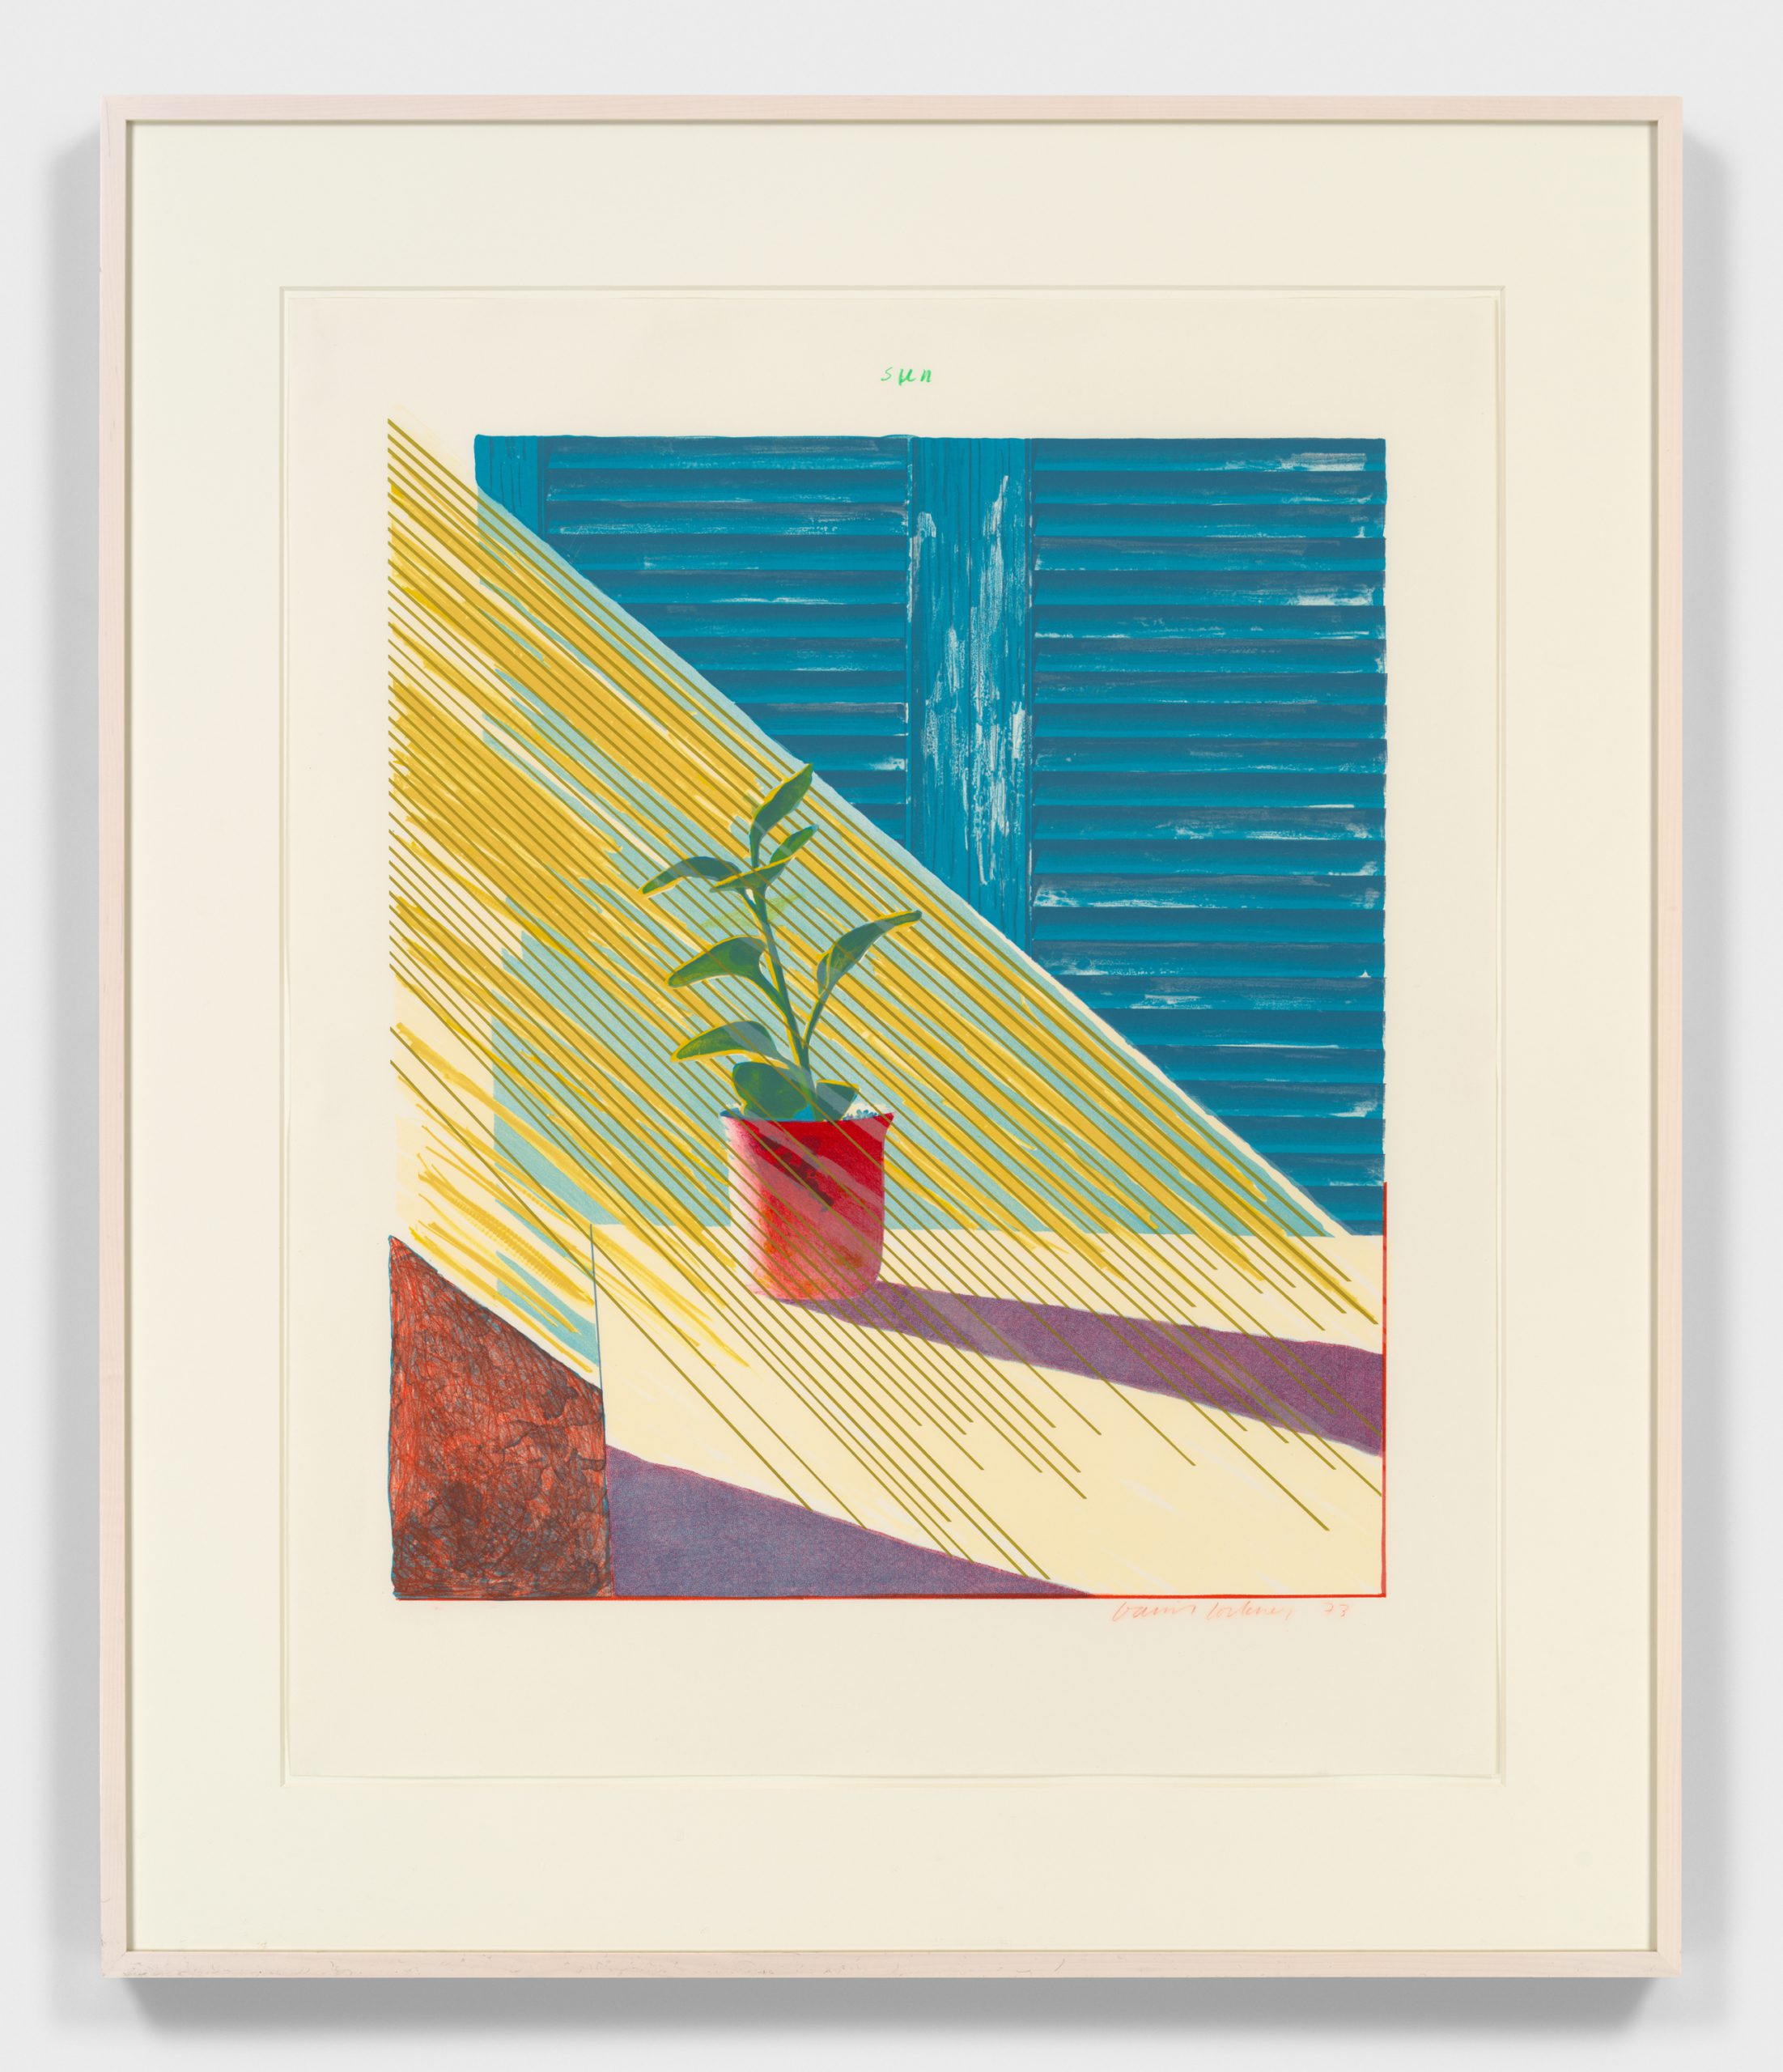 Sun by David Hockney